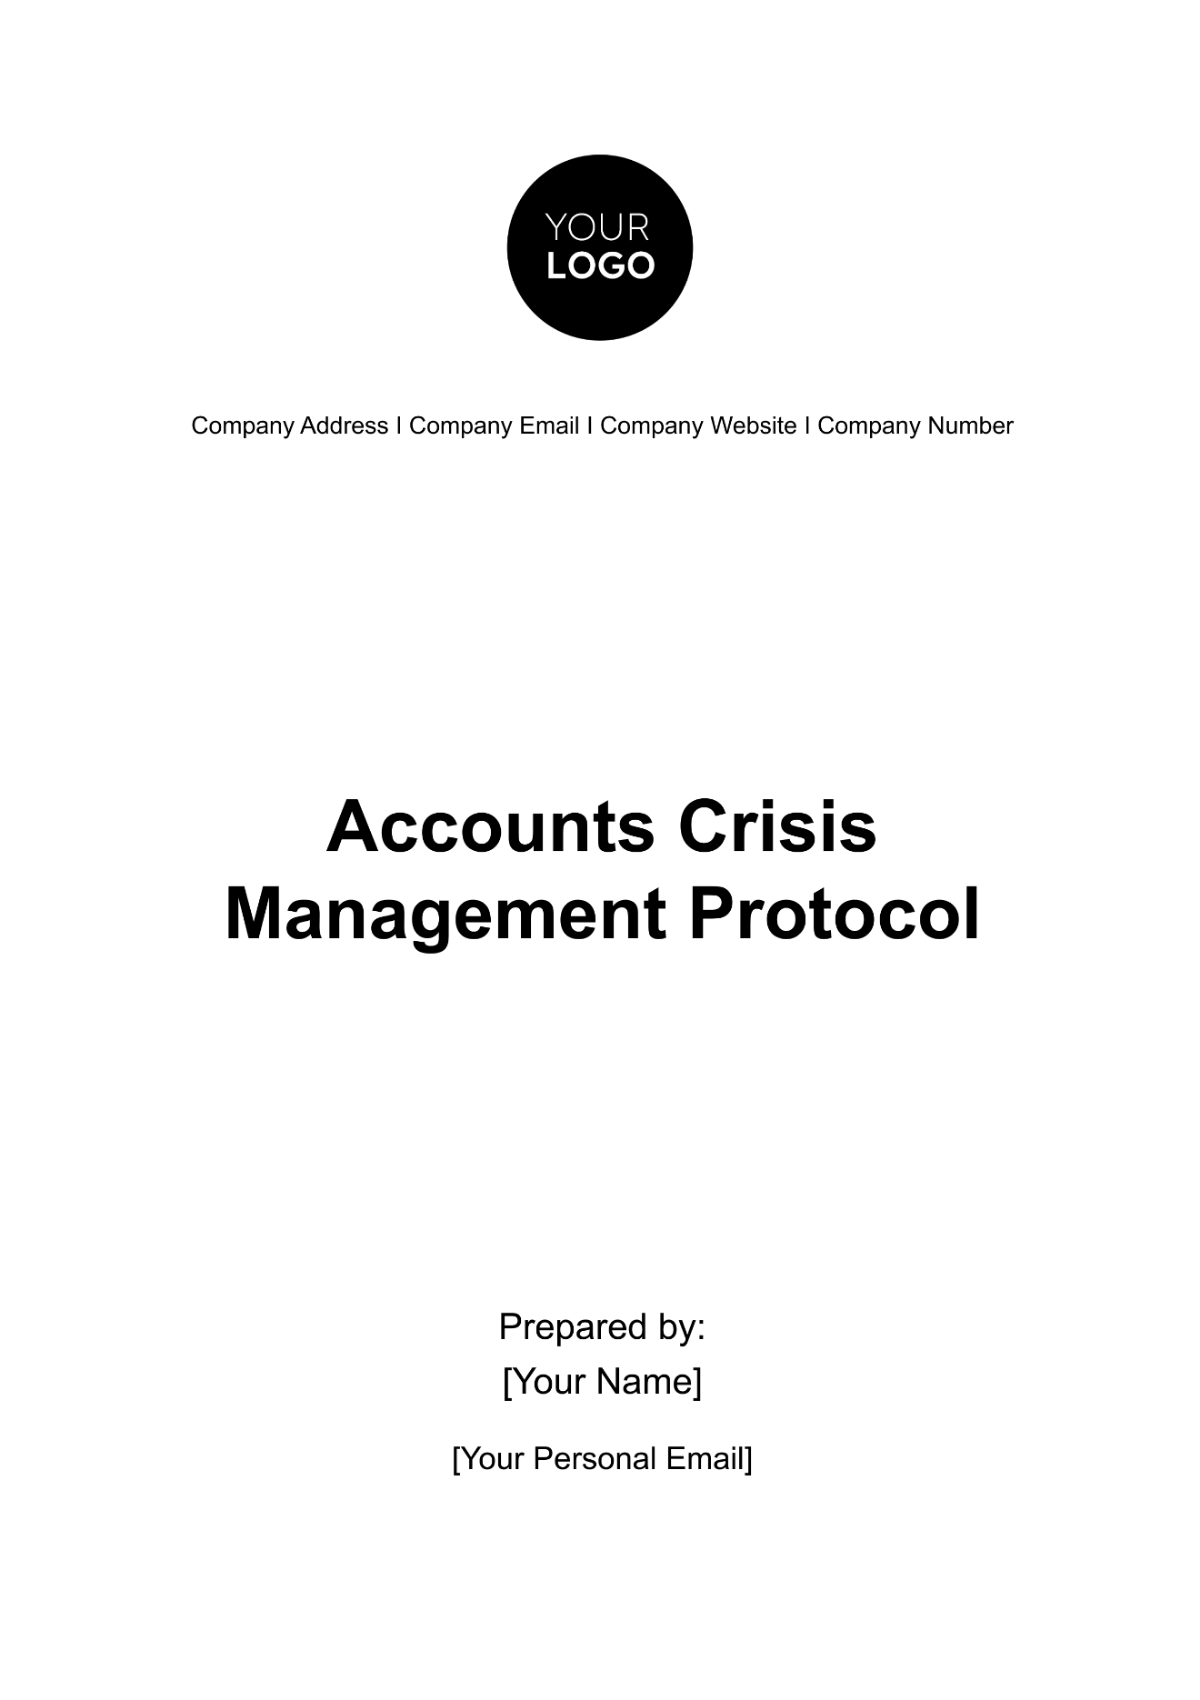 Accounts Crisis Management Protocol Template